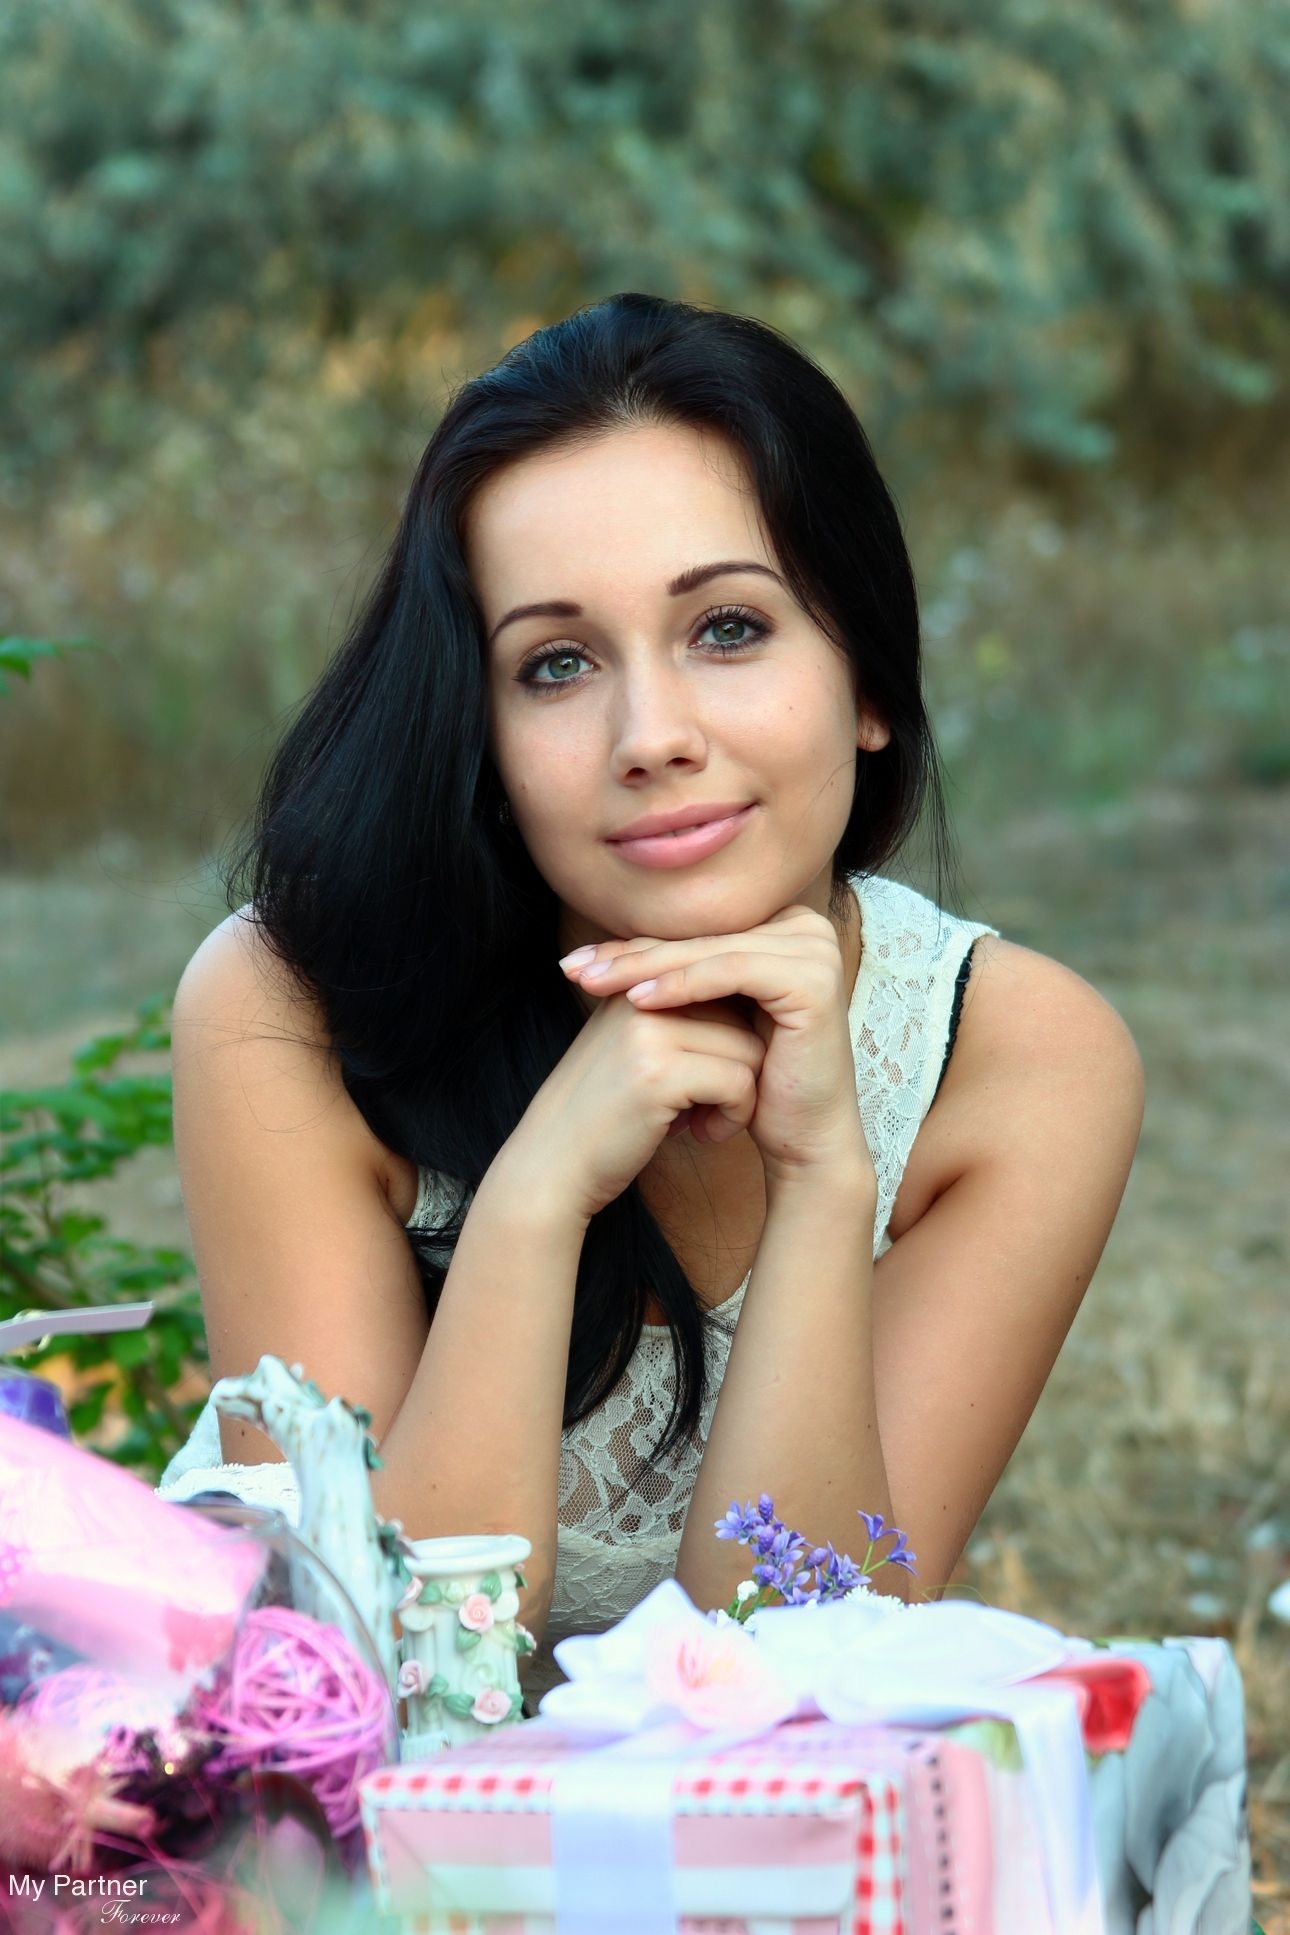 Mature Ukraine Woman Irina From Odessa Ukraine